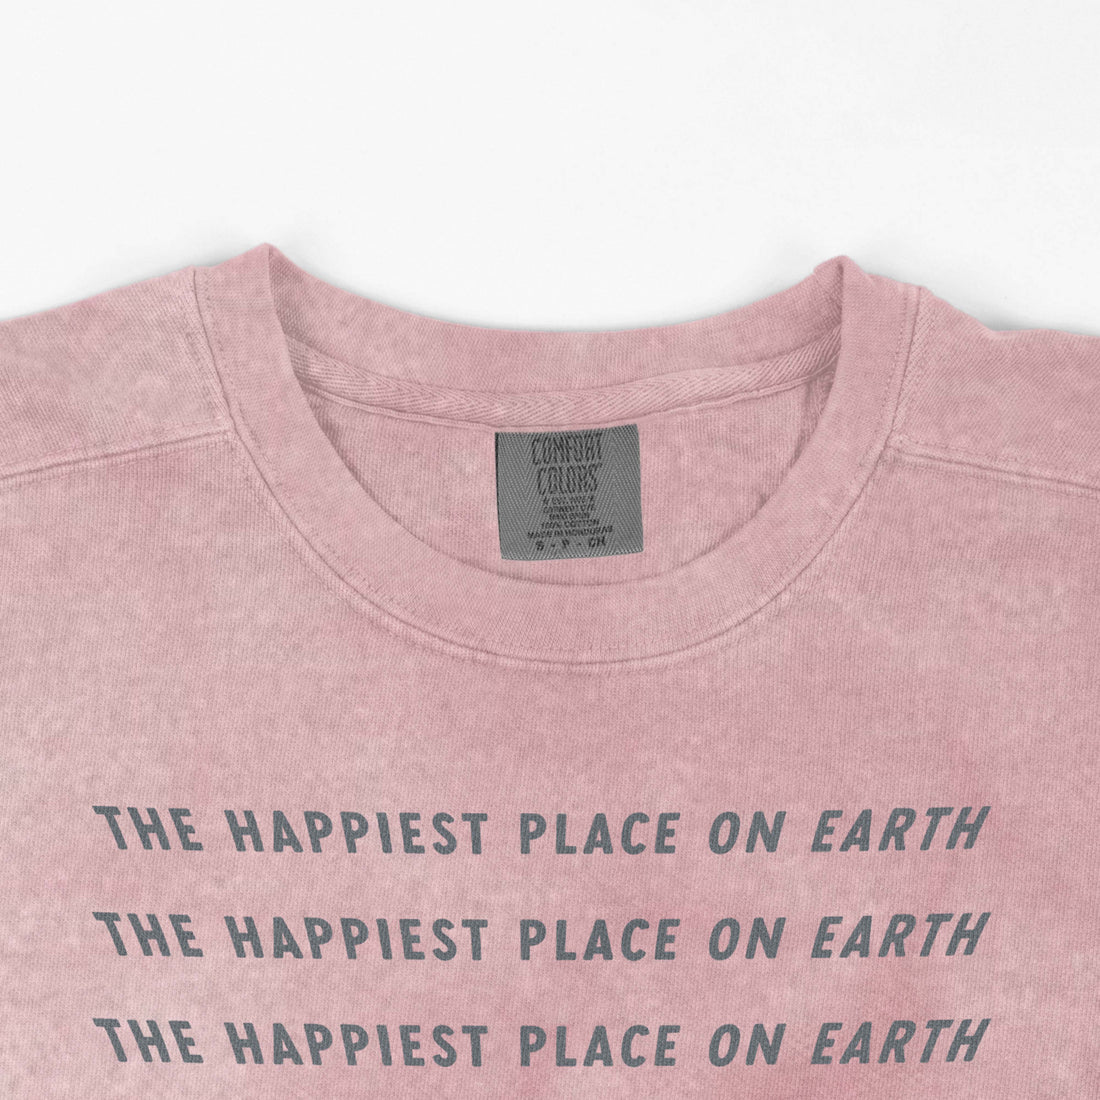 Clay Happiest Place Sweater (Premium Colorblast)